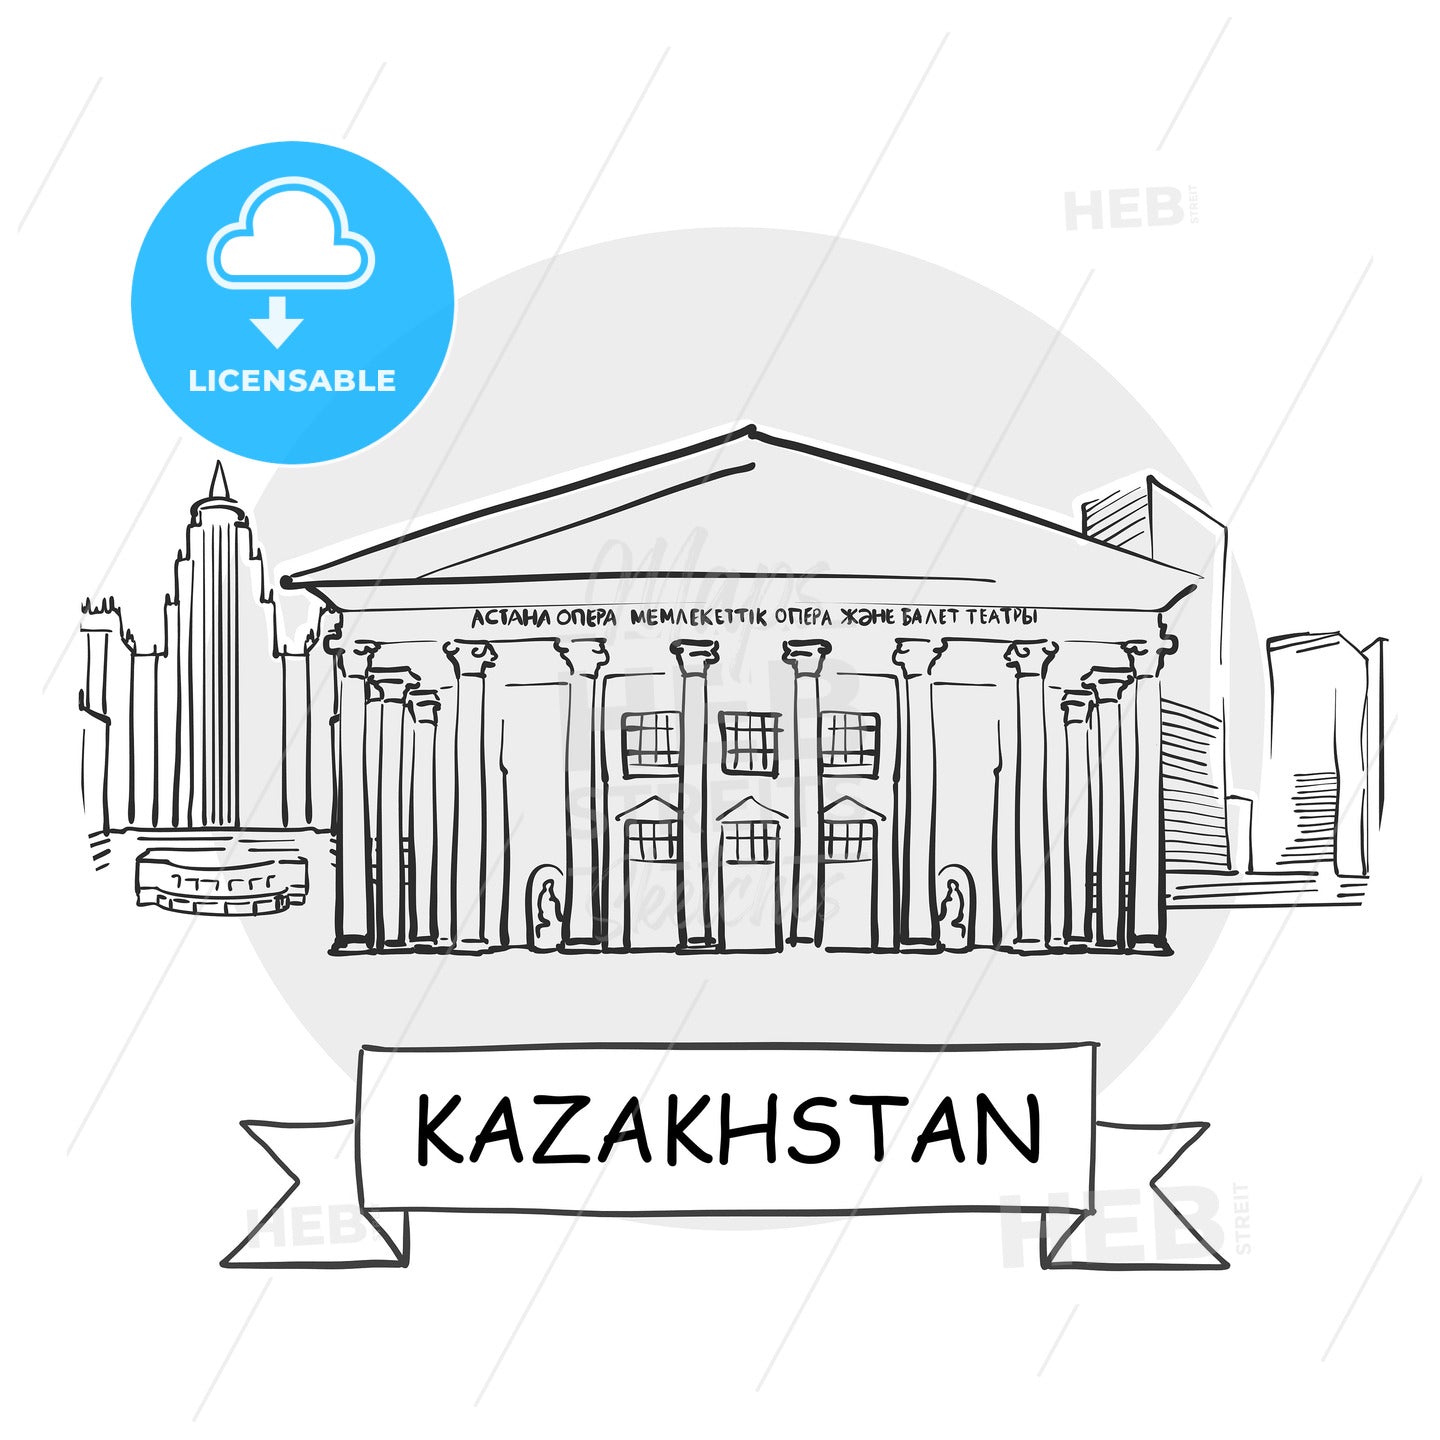 Kazakhstan hand-drawn urban vector sign – instant download